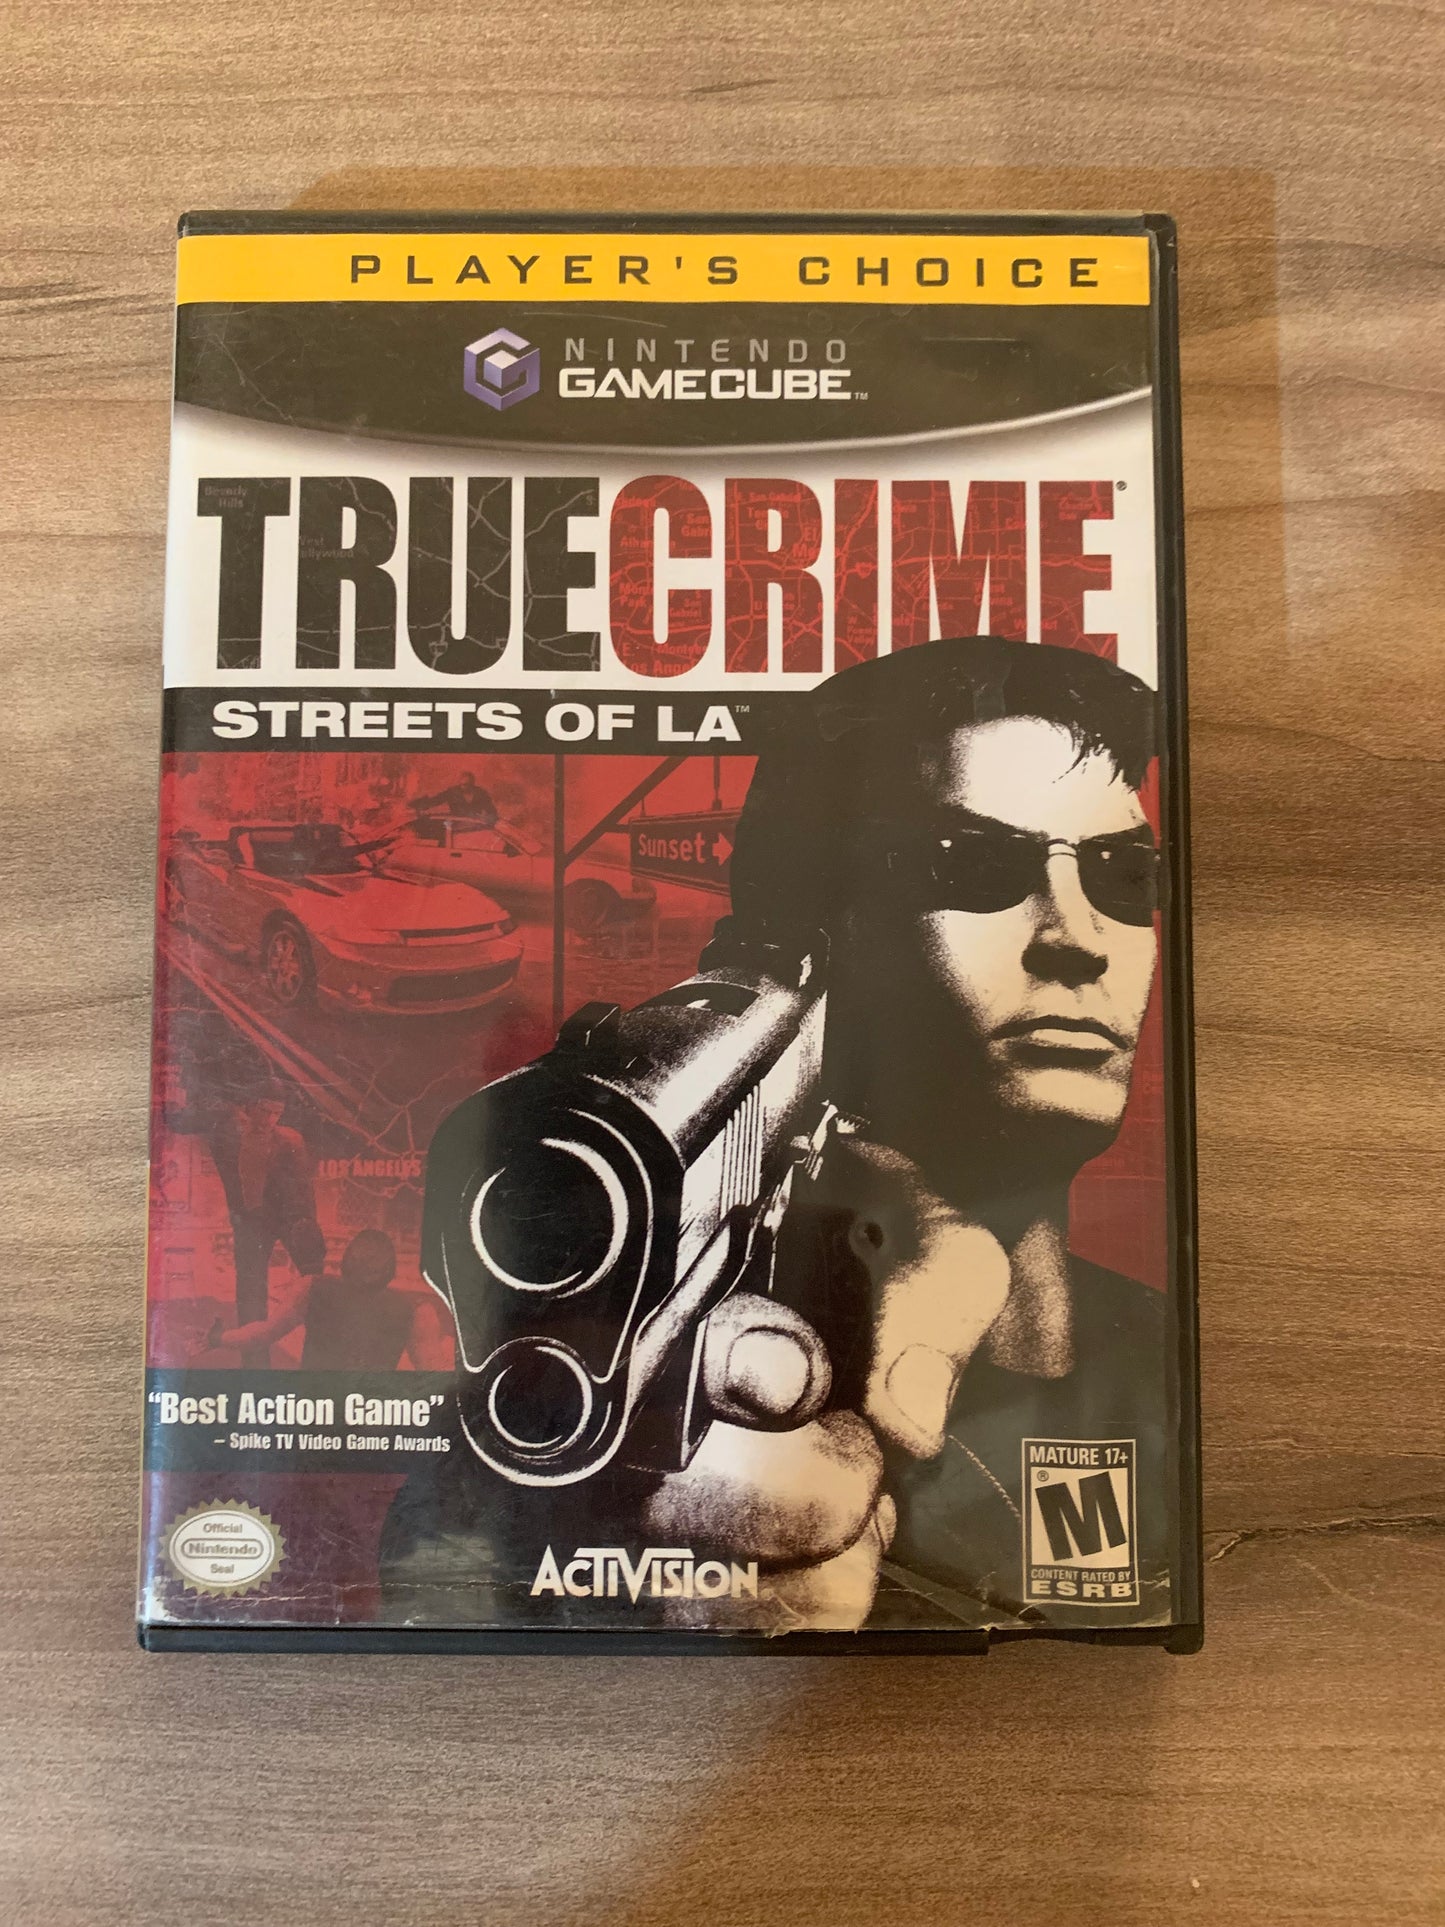 NiNTENDO GAMECUBE [NGC] | TRUE CRIME STREET OF LA | PLAYERS CHOiCE